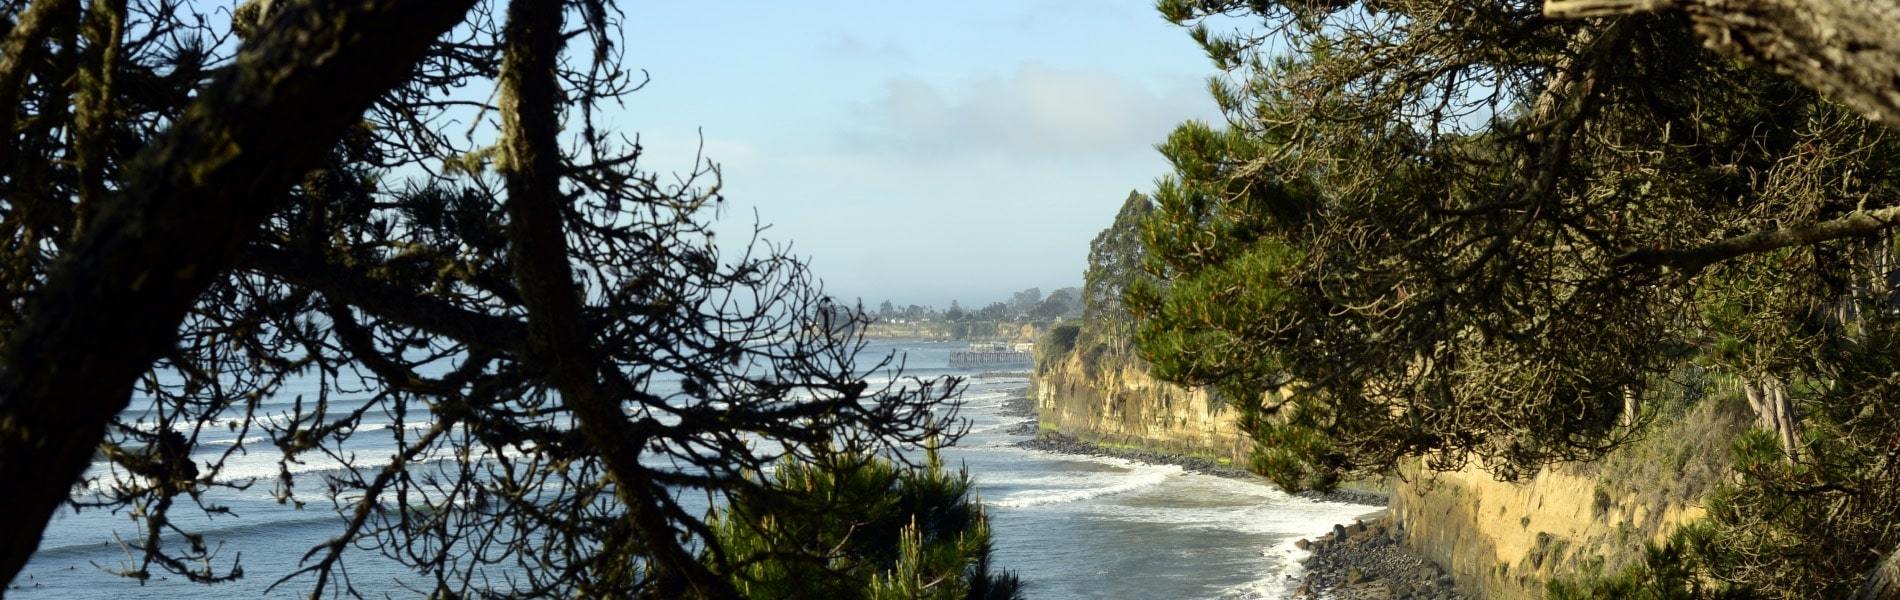 View of cliffs at New Brighton beach in California